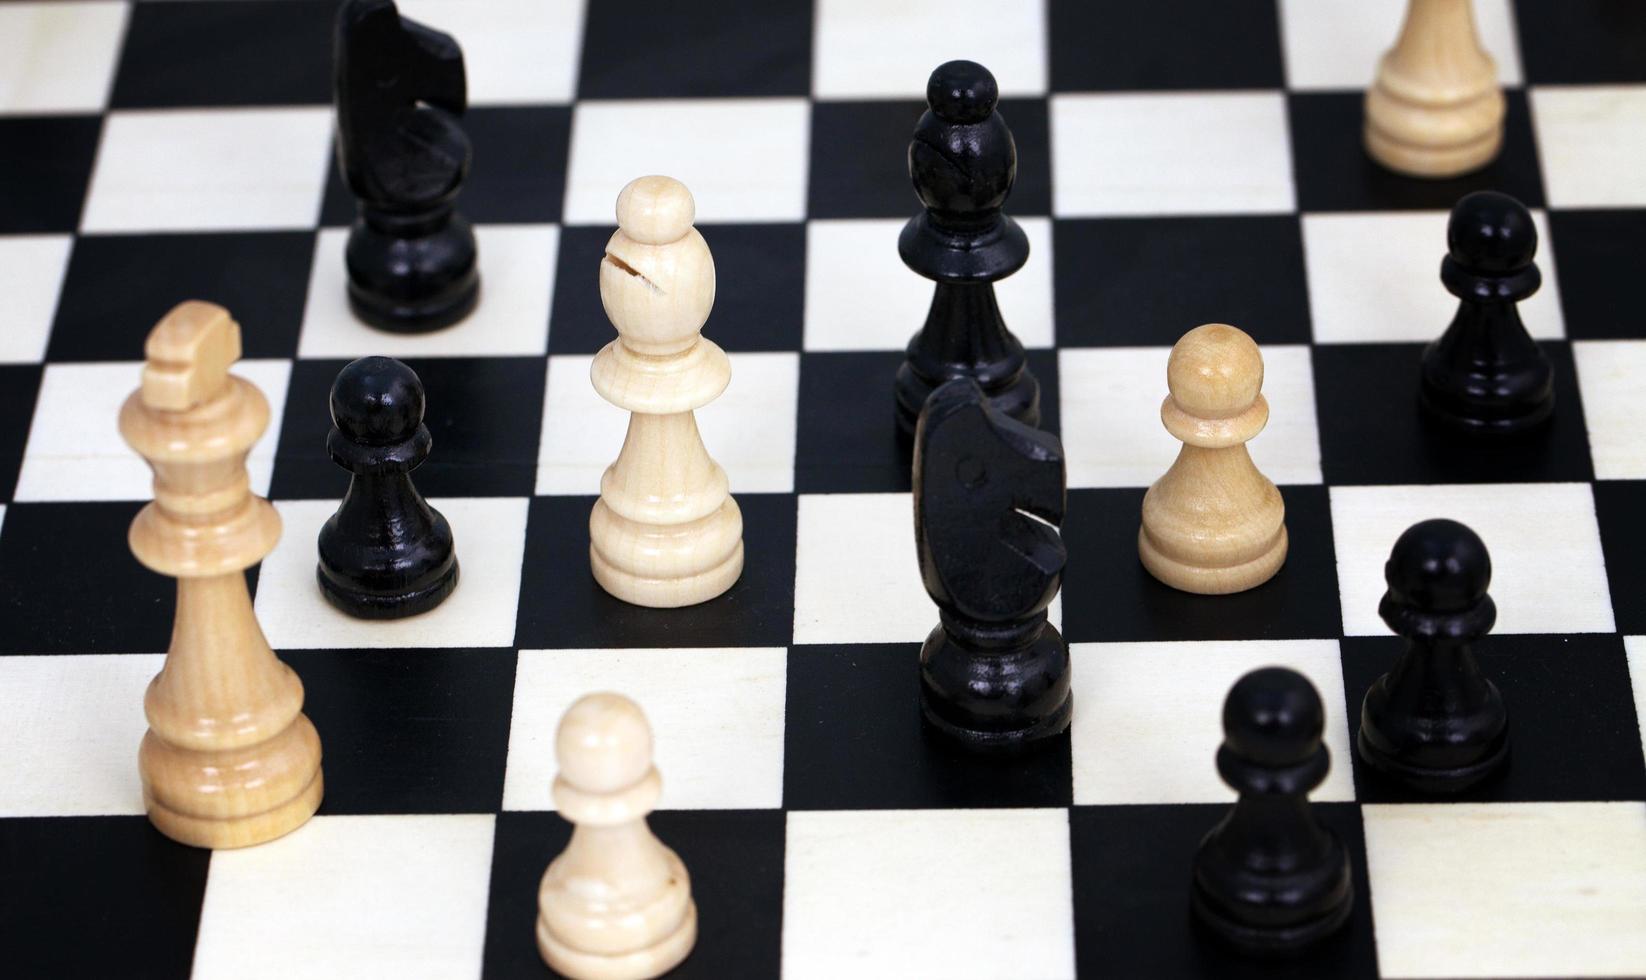 jogo de xadrez de estratégia foto